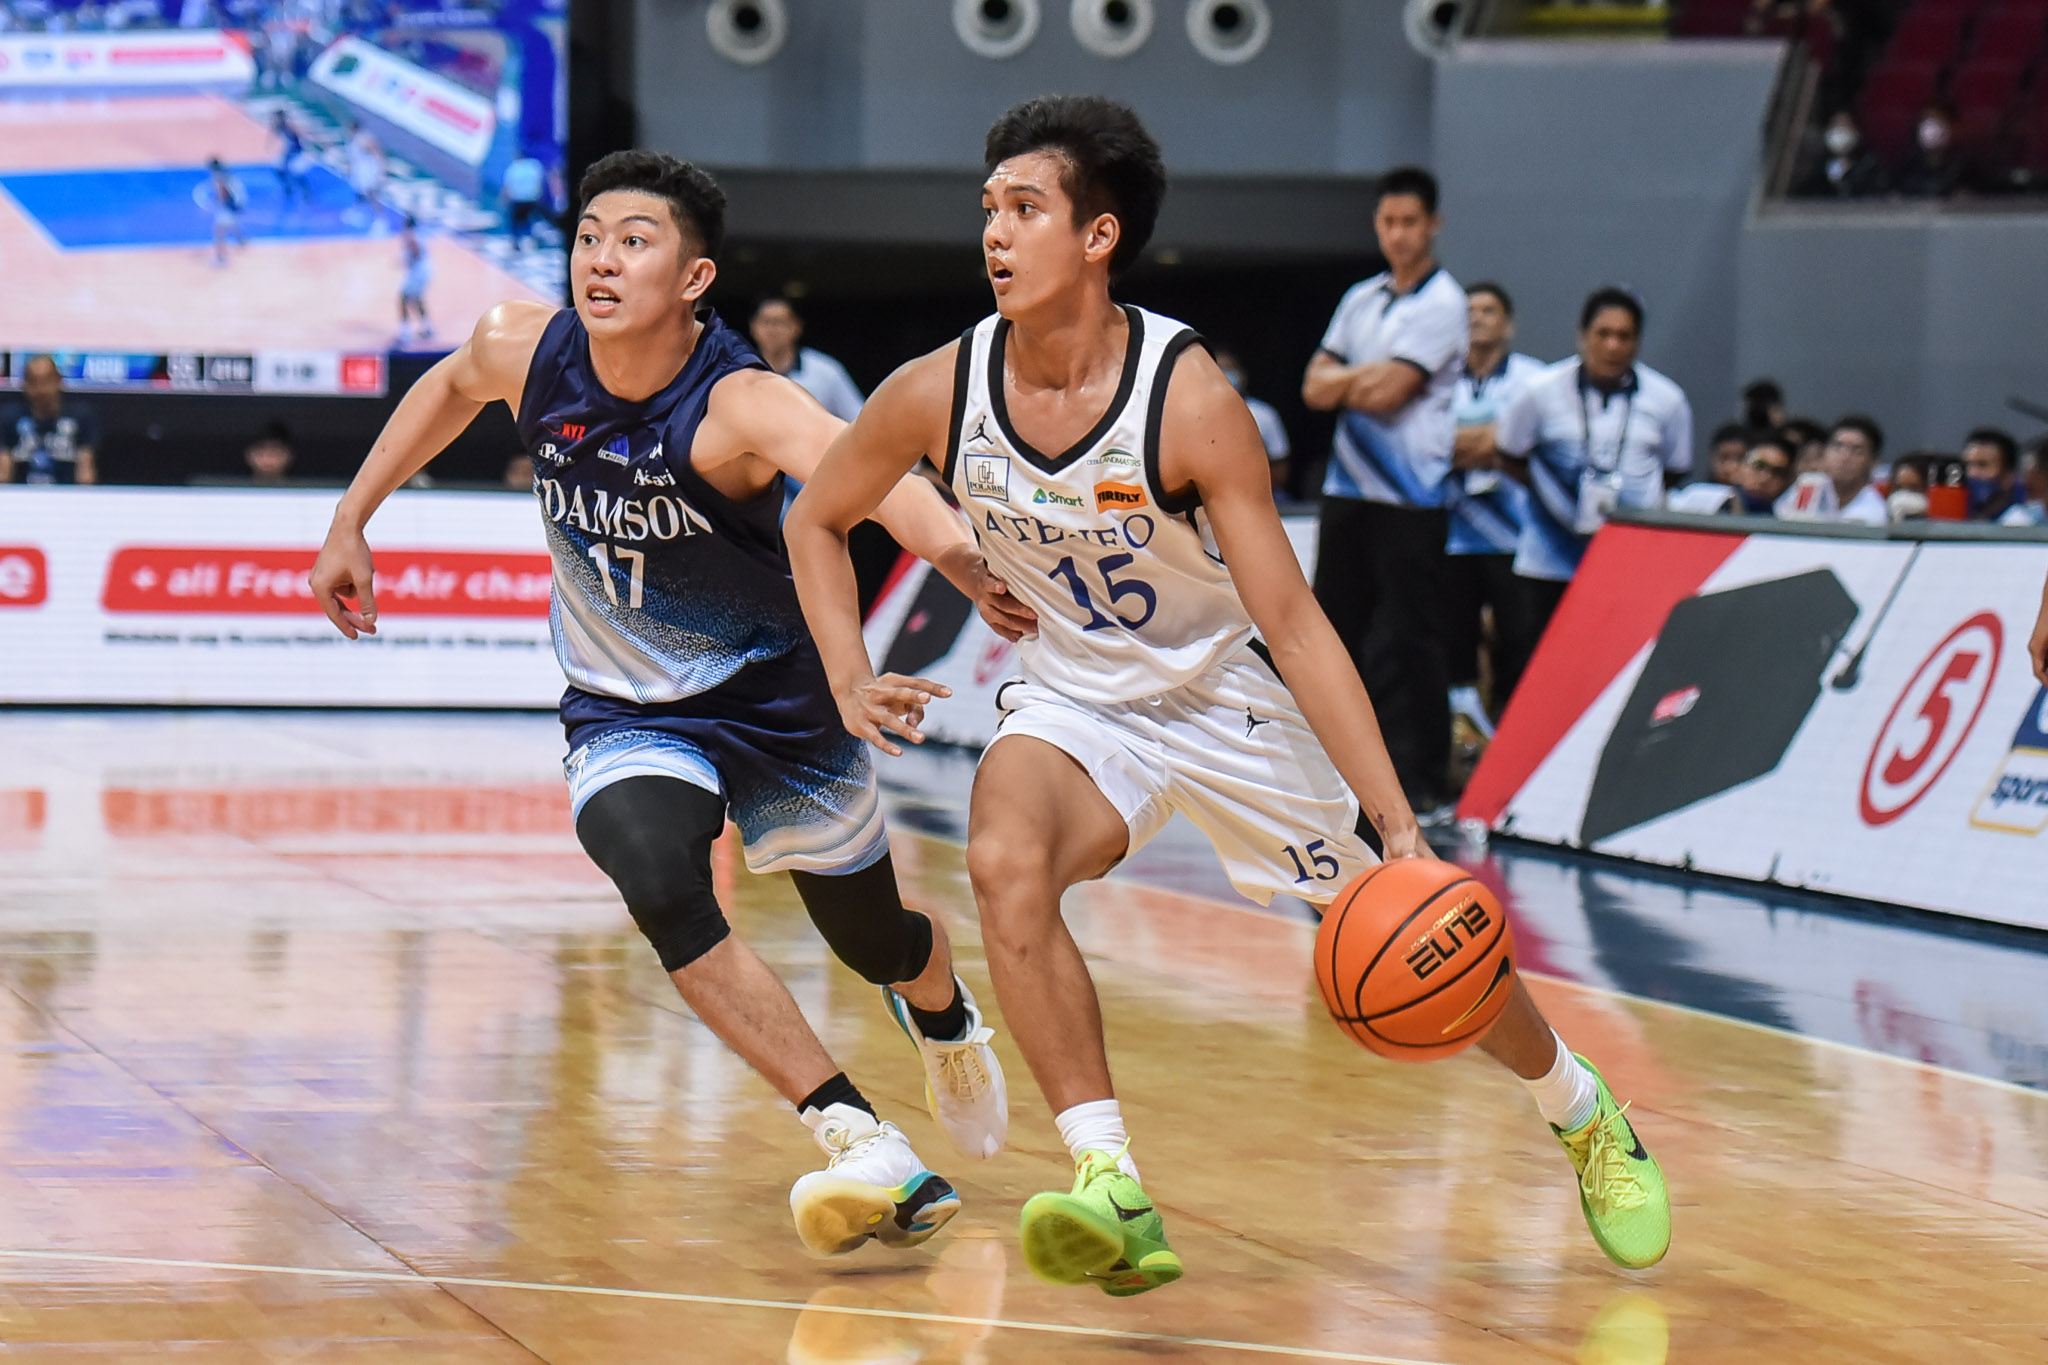 UAAP-84-MBB-ADMU-vs.-ADU-Forthsky-Padrigao-5927 Baldwin vows Ateneo will not let guard down vs Adamson: 'Play to win' ADMU Basketball News UAAP  - philippine sports news